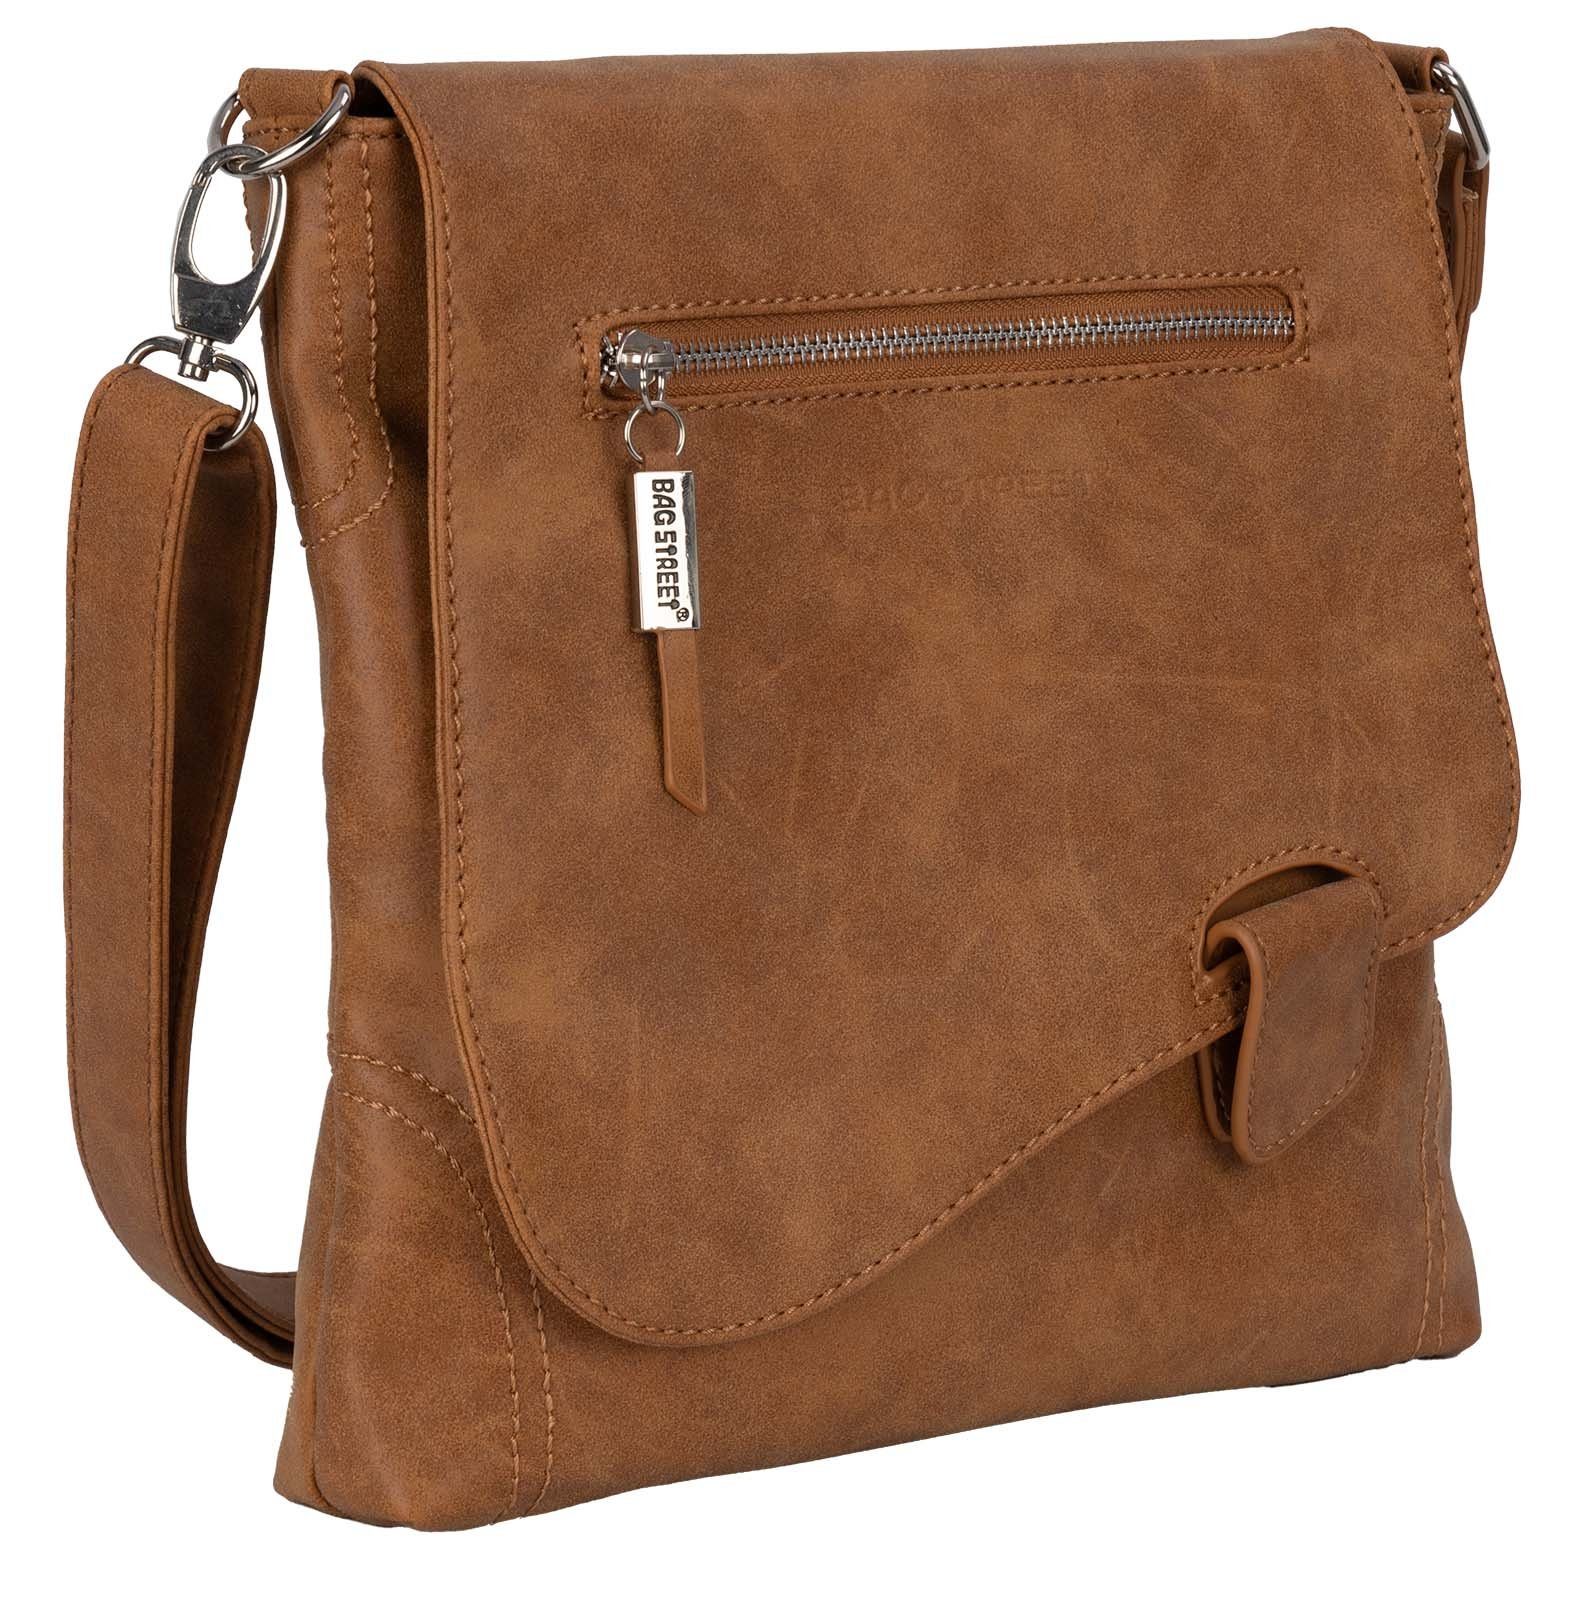 BAG STREET Schlüsseltasche Bag Street Damentasche Umhängetasche Handtasche Schultertasche T0104, als Schultertasche, Umhängetasche tragbar COGNAC